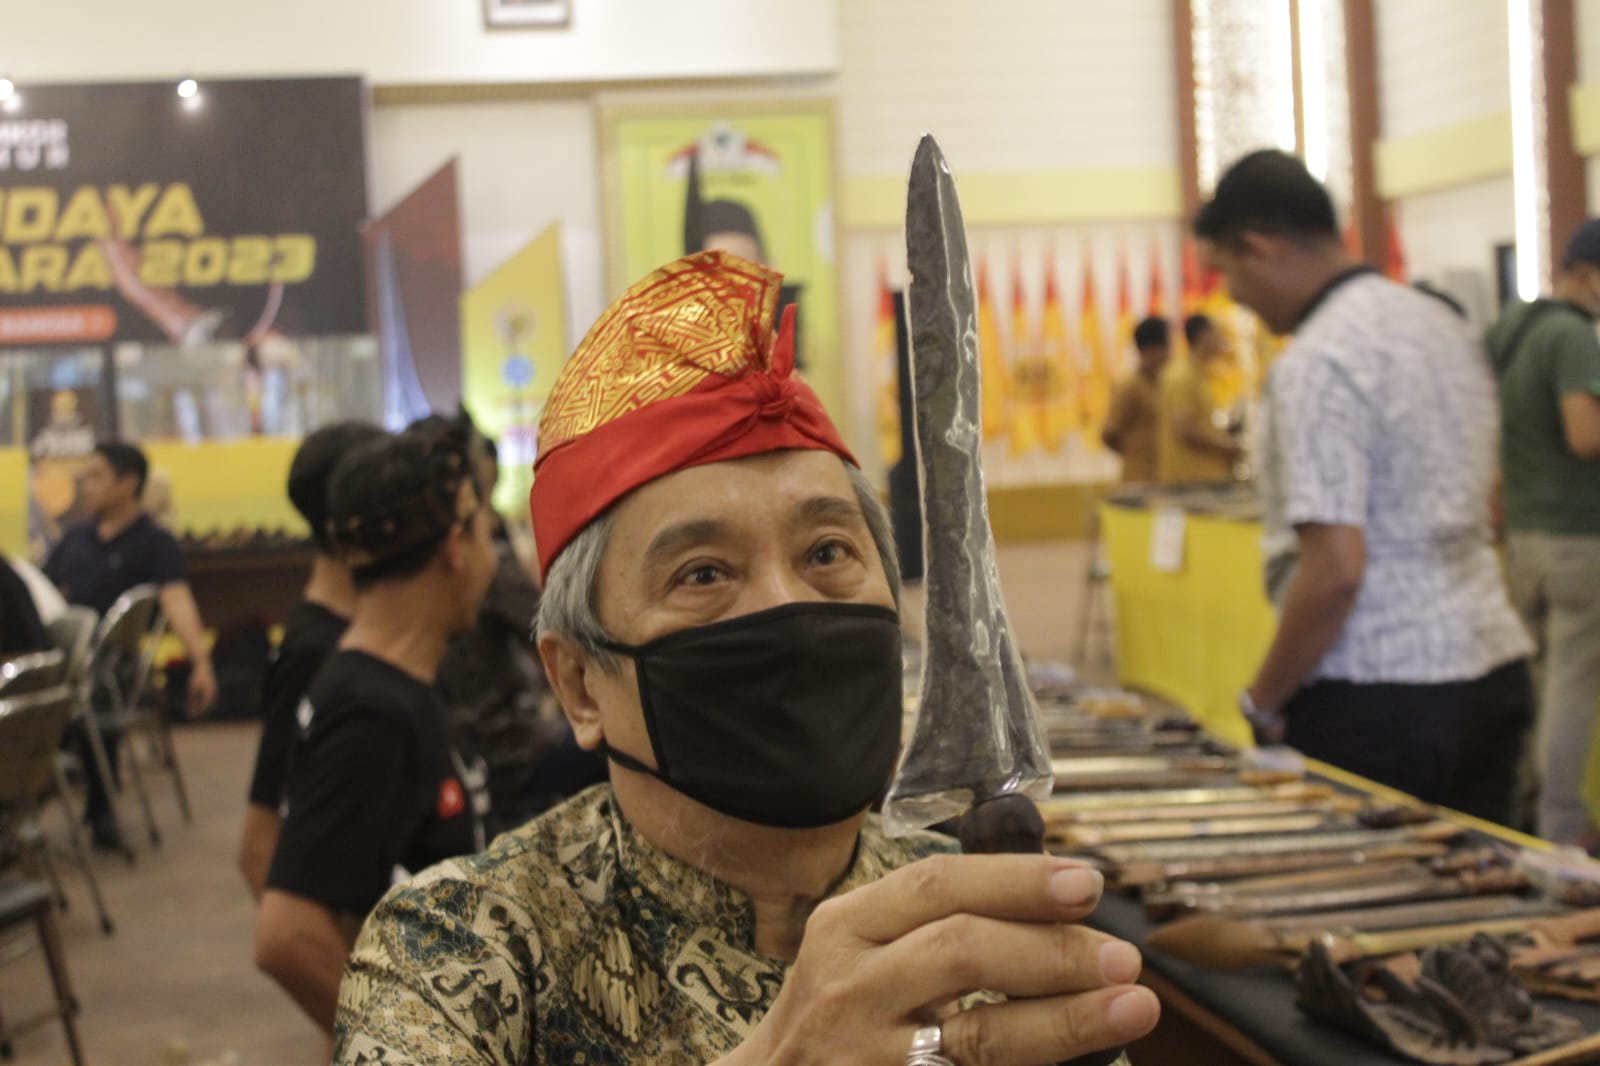 Gebyar Budaya Keris Nusantara: Koleksi Langka yang Diduga dari Era Singhasari dan Kediri